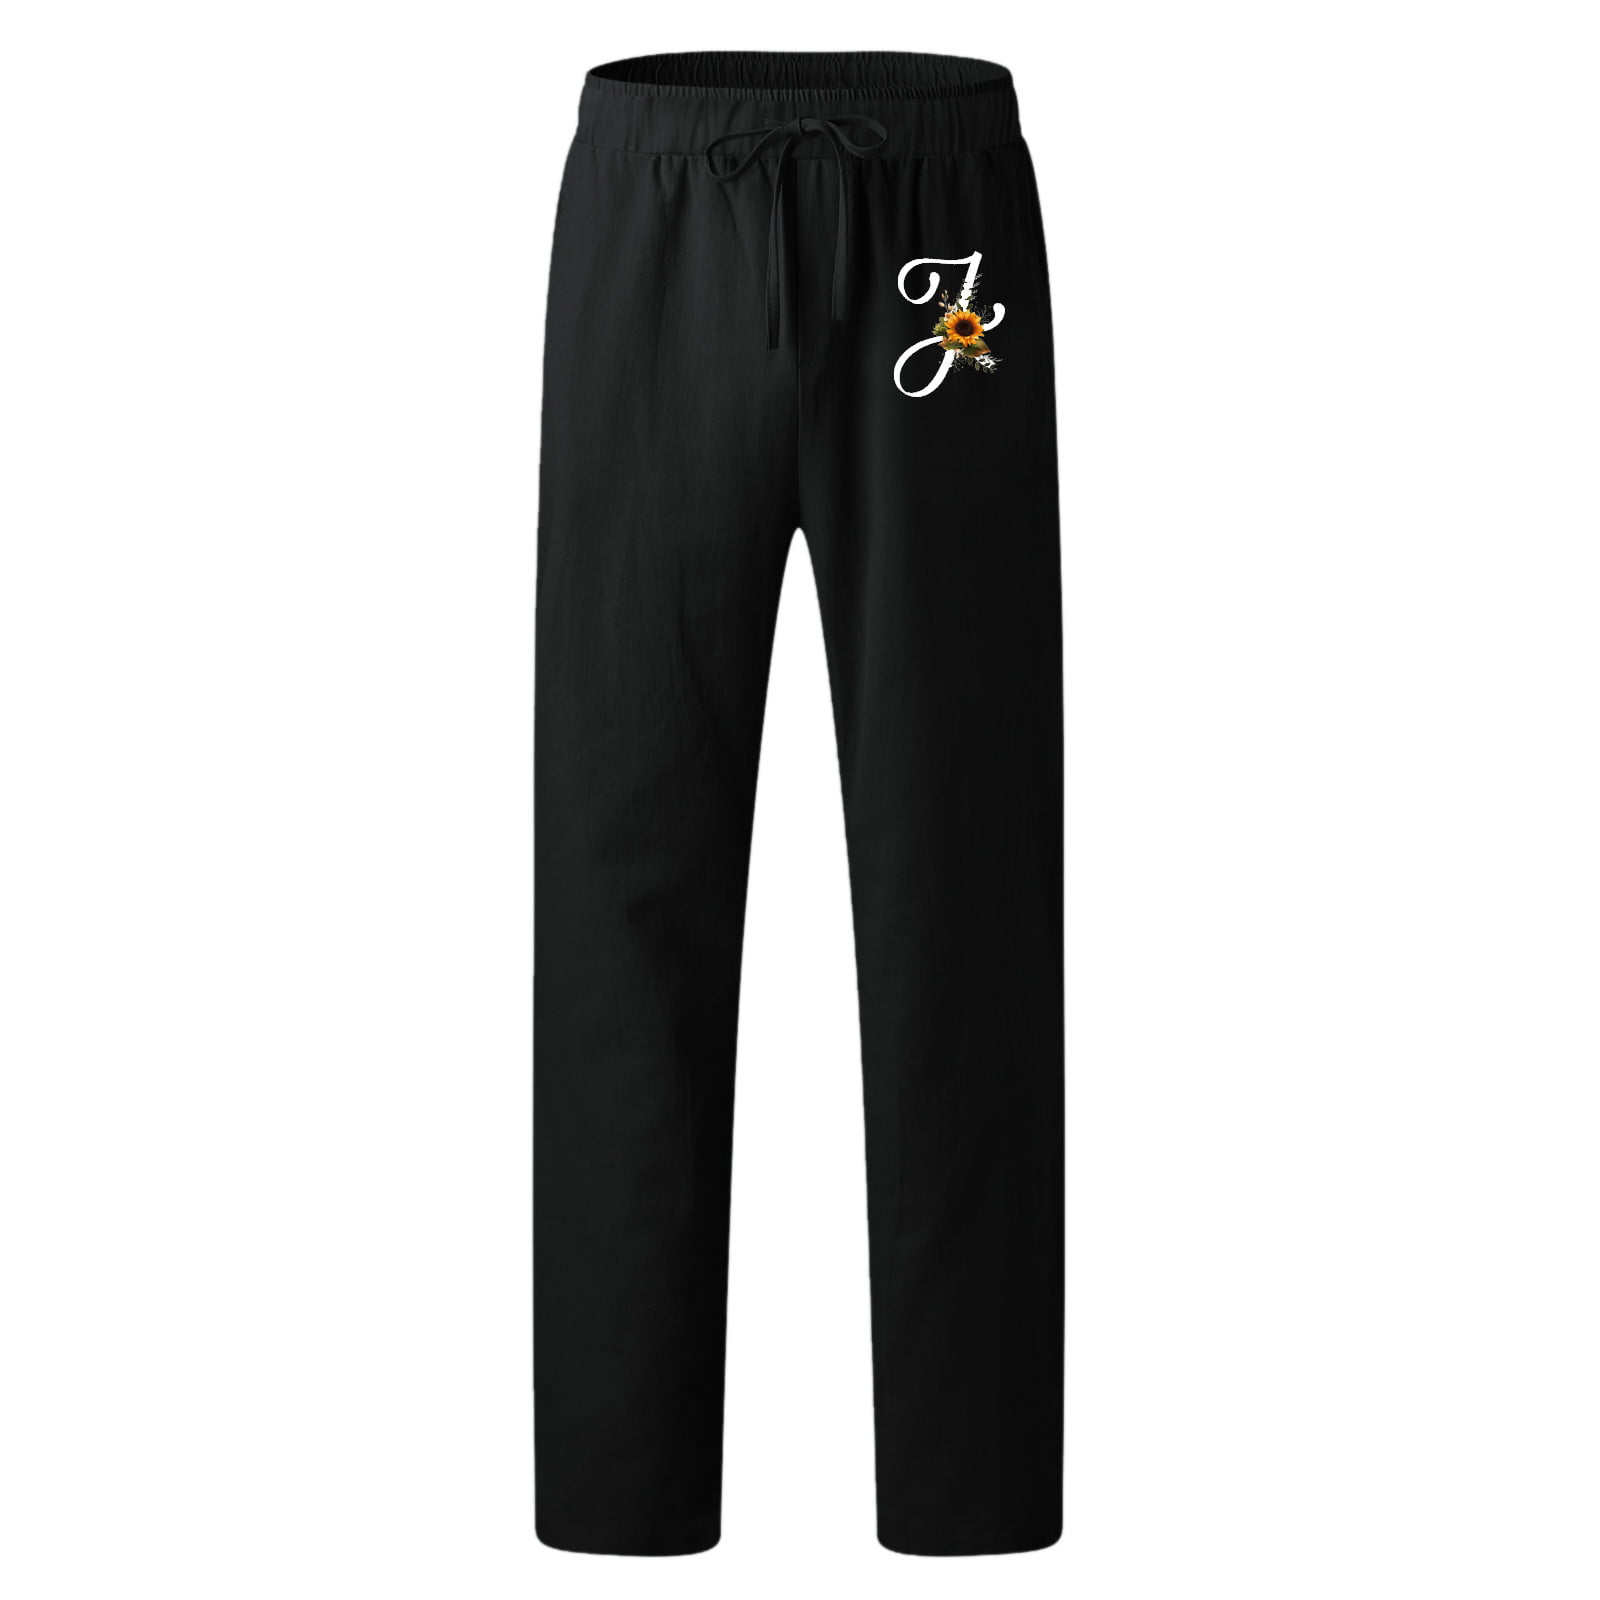 LEEy-world Pants For Men Mens Drawstring Running Joggers Elastic Waist  Sweats Pants Bottom Workout Sweatpants with Pockets White,L 